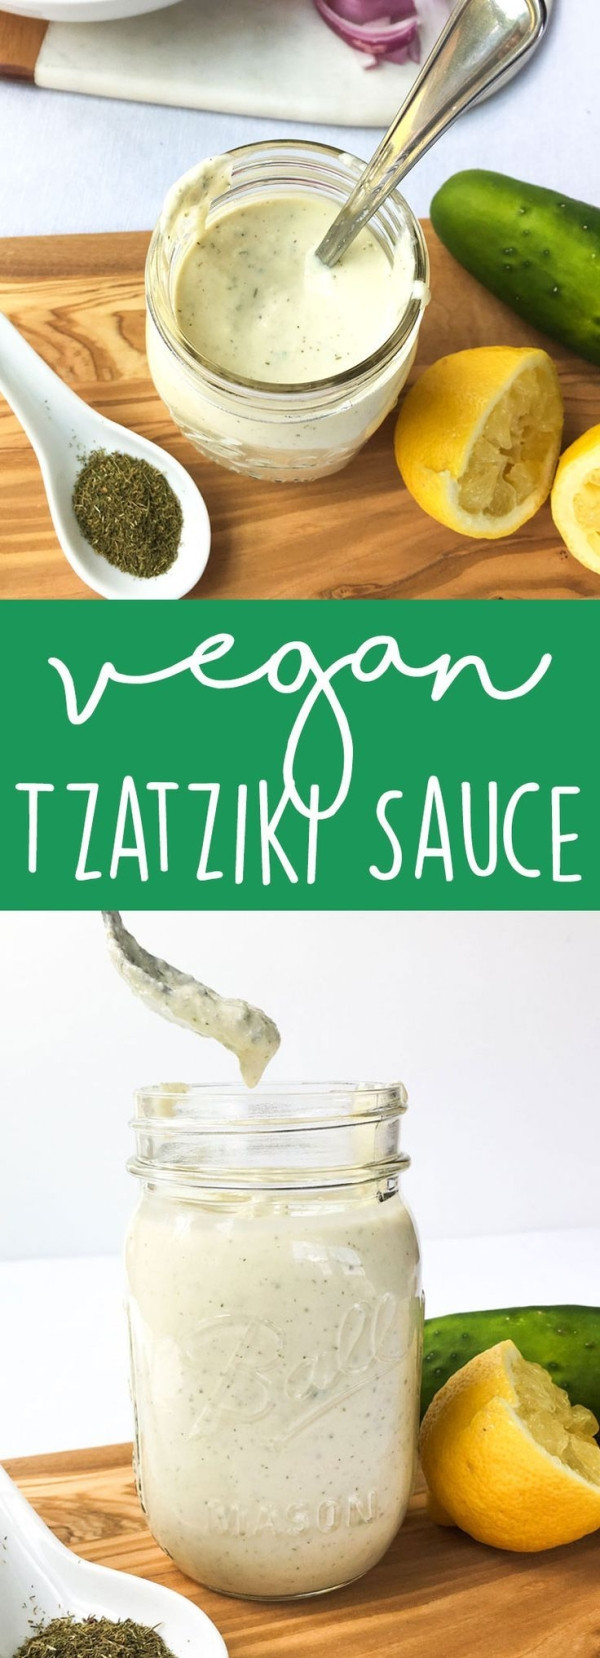 Dairy Free Tzatziki Sauce
 Vegan Tzatziki Sauce Recipe creamy tangy and delicious